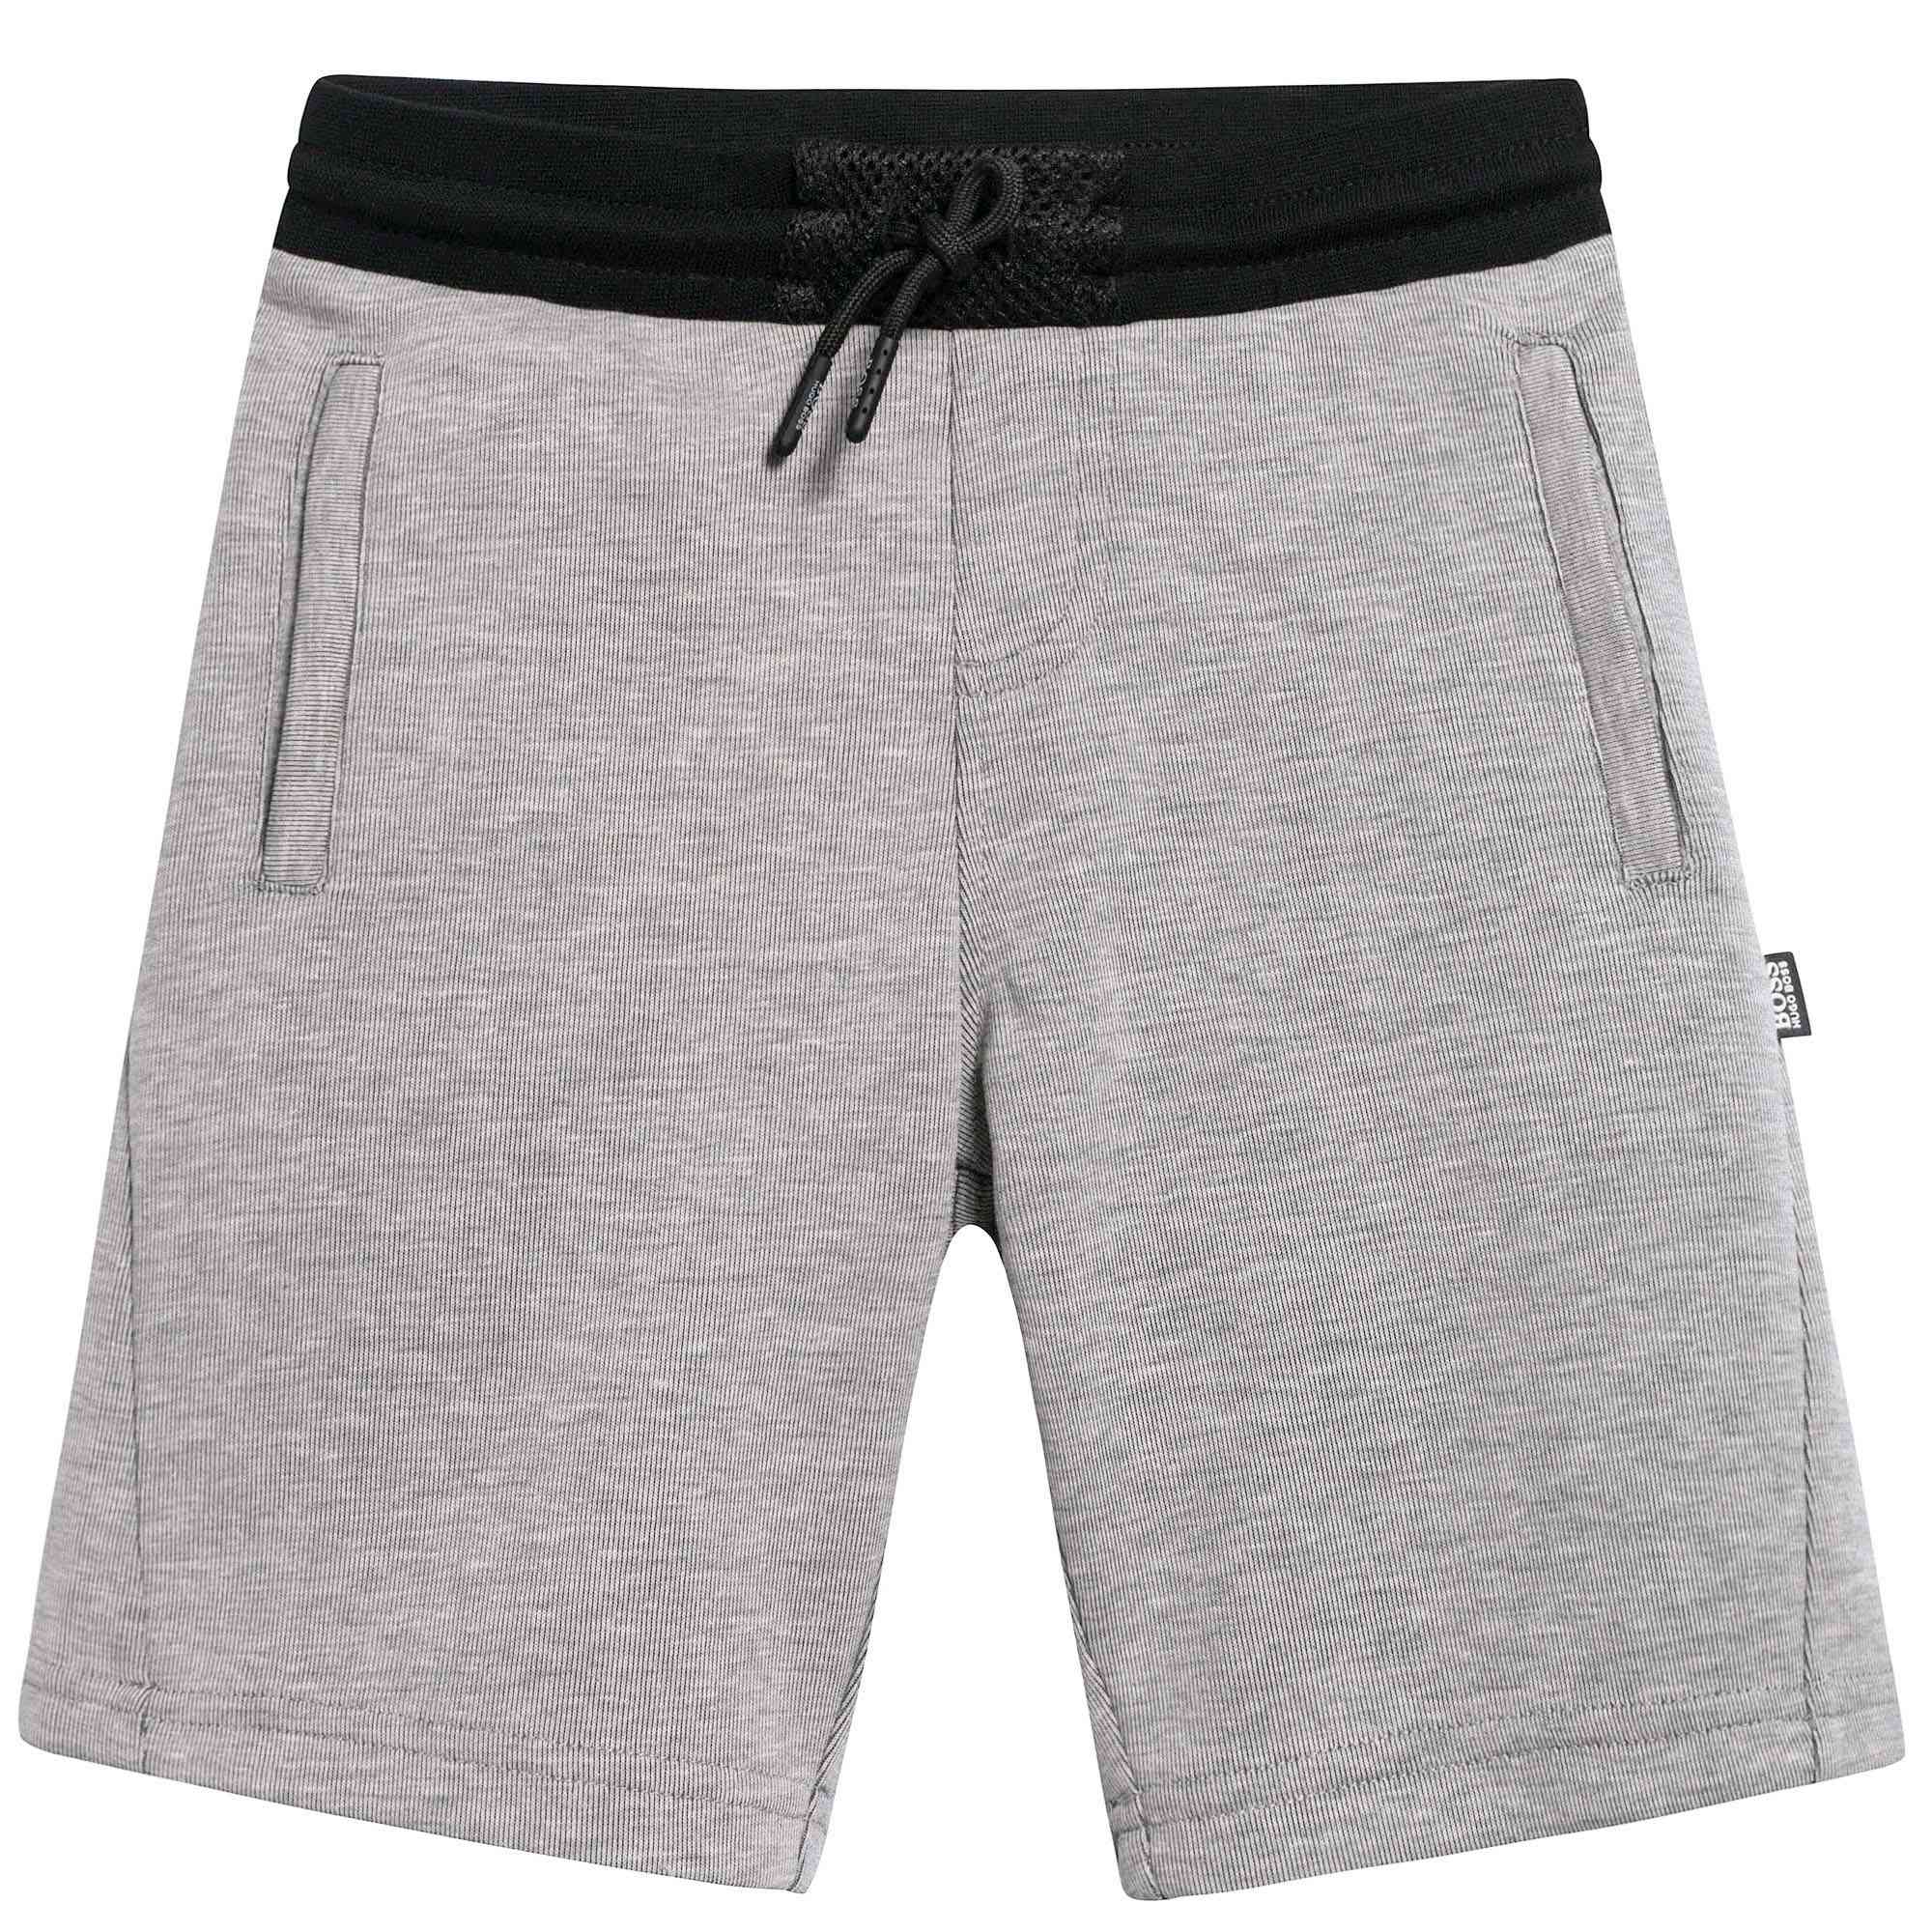 Boys Grey Cotton Shorts